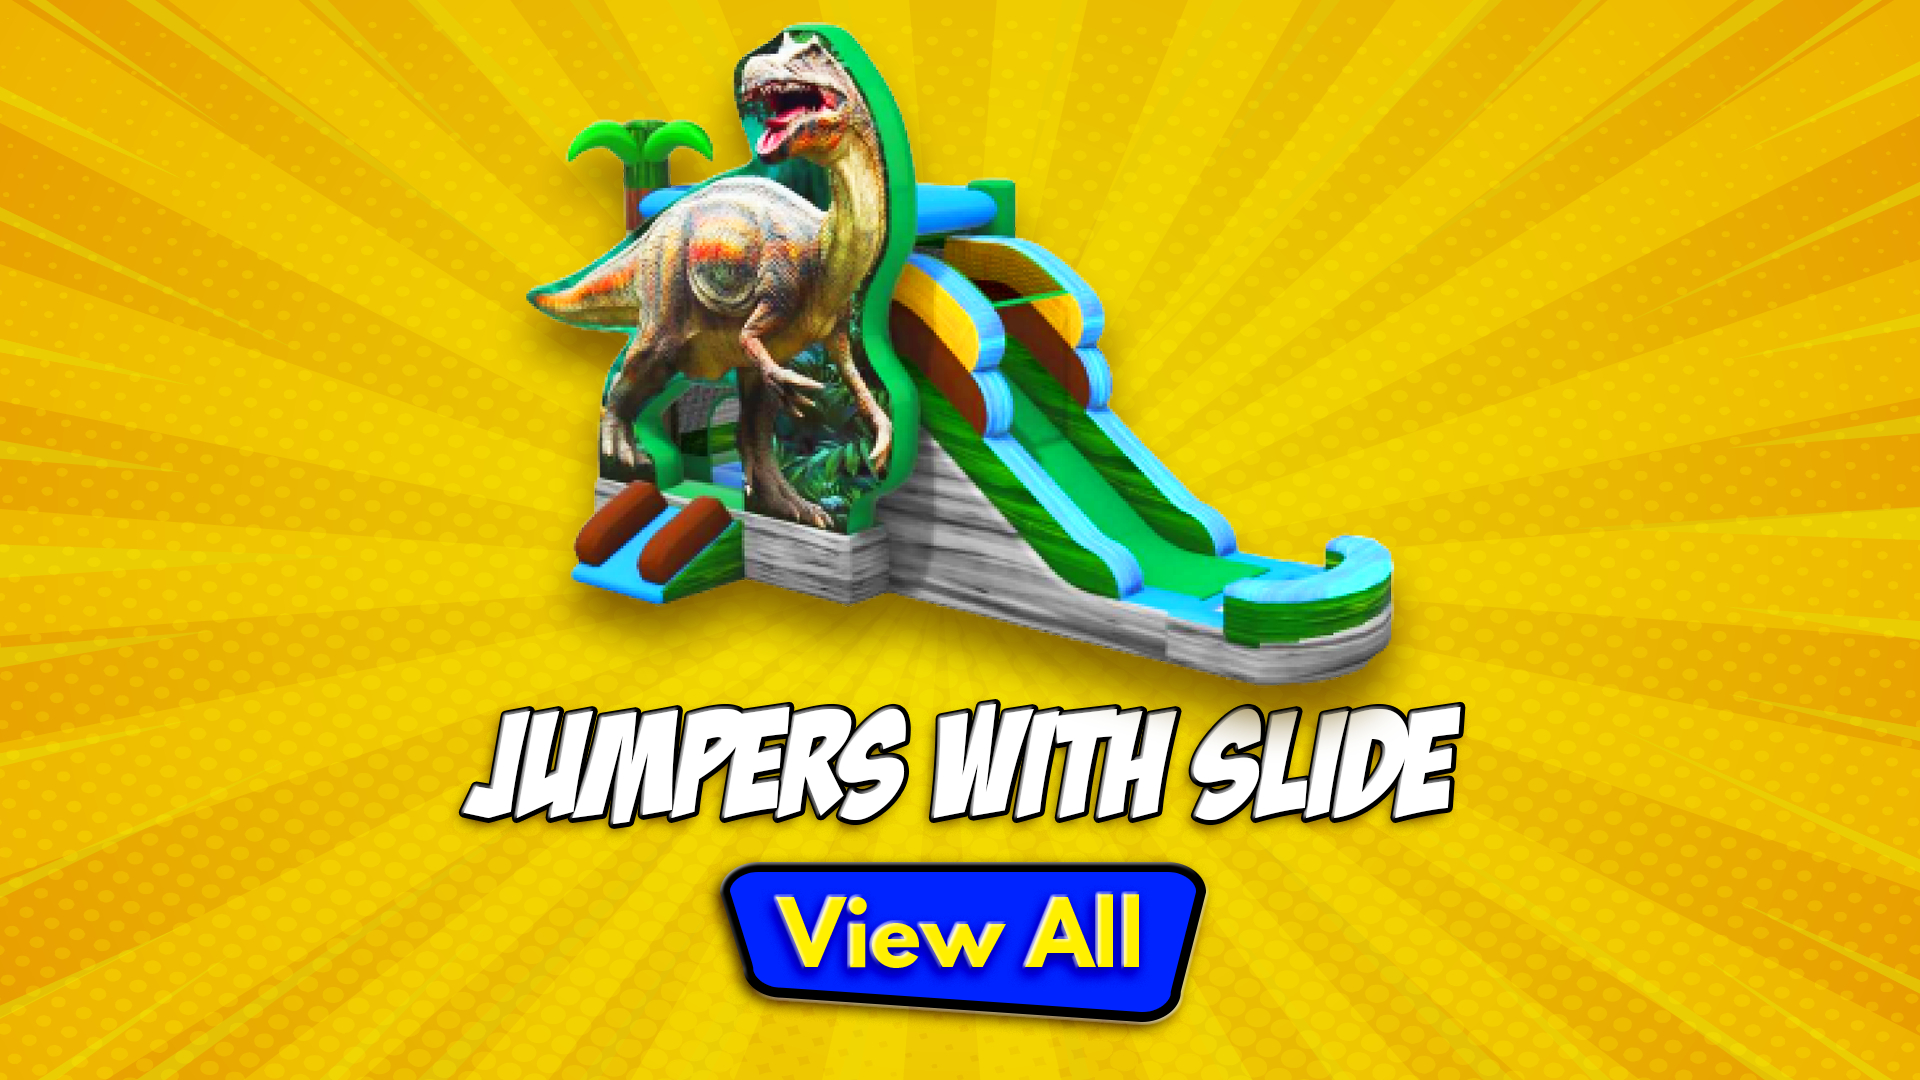 Jumper with slide rentals in Belmont